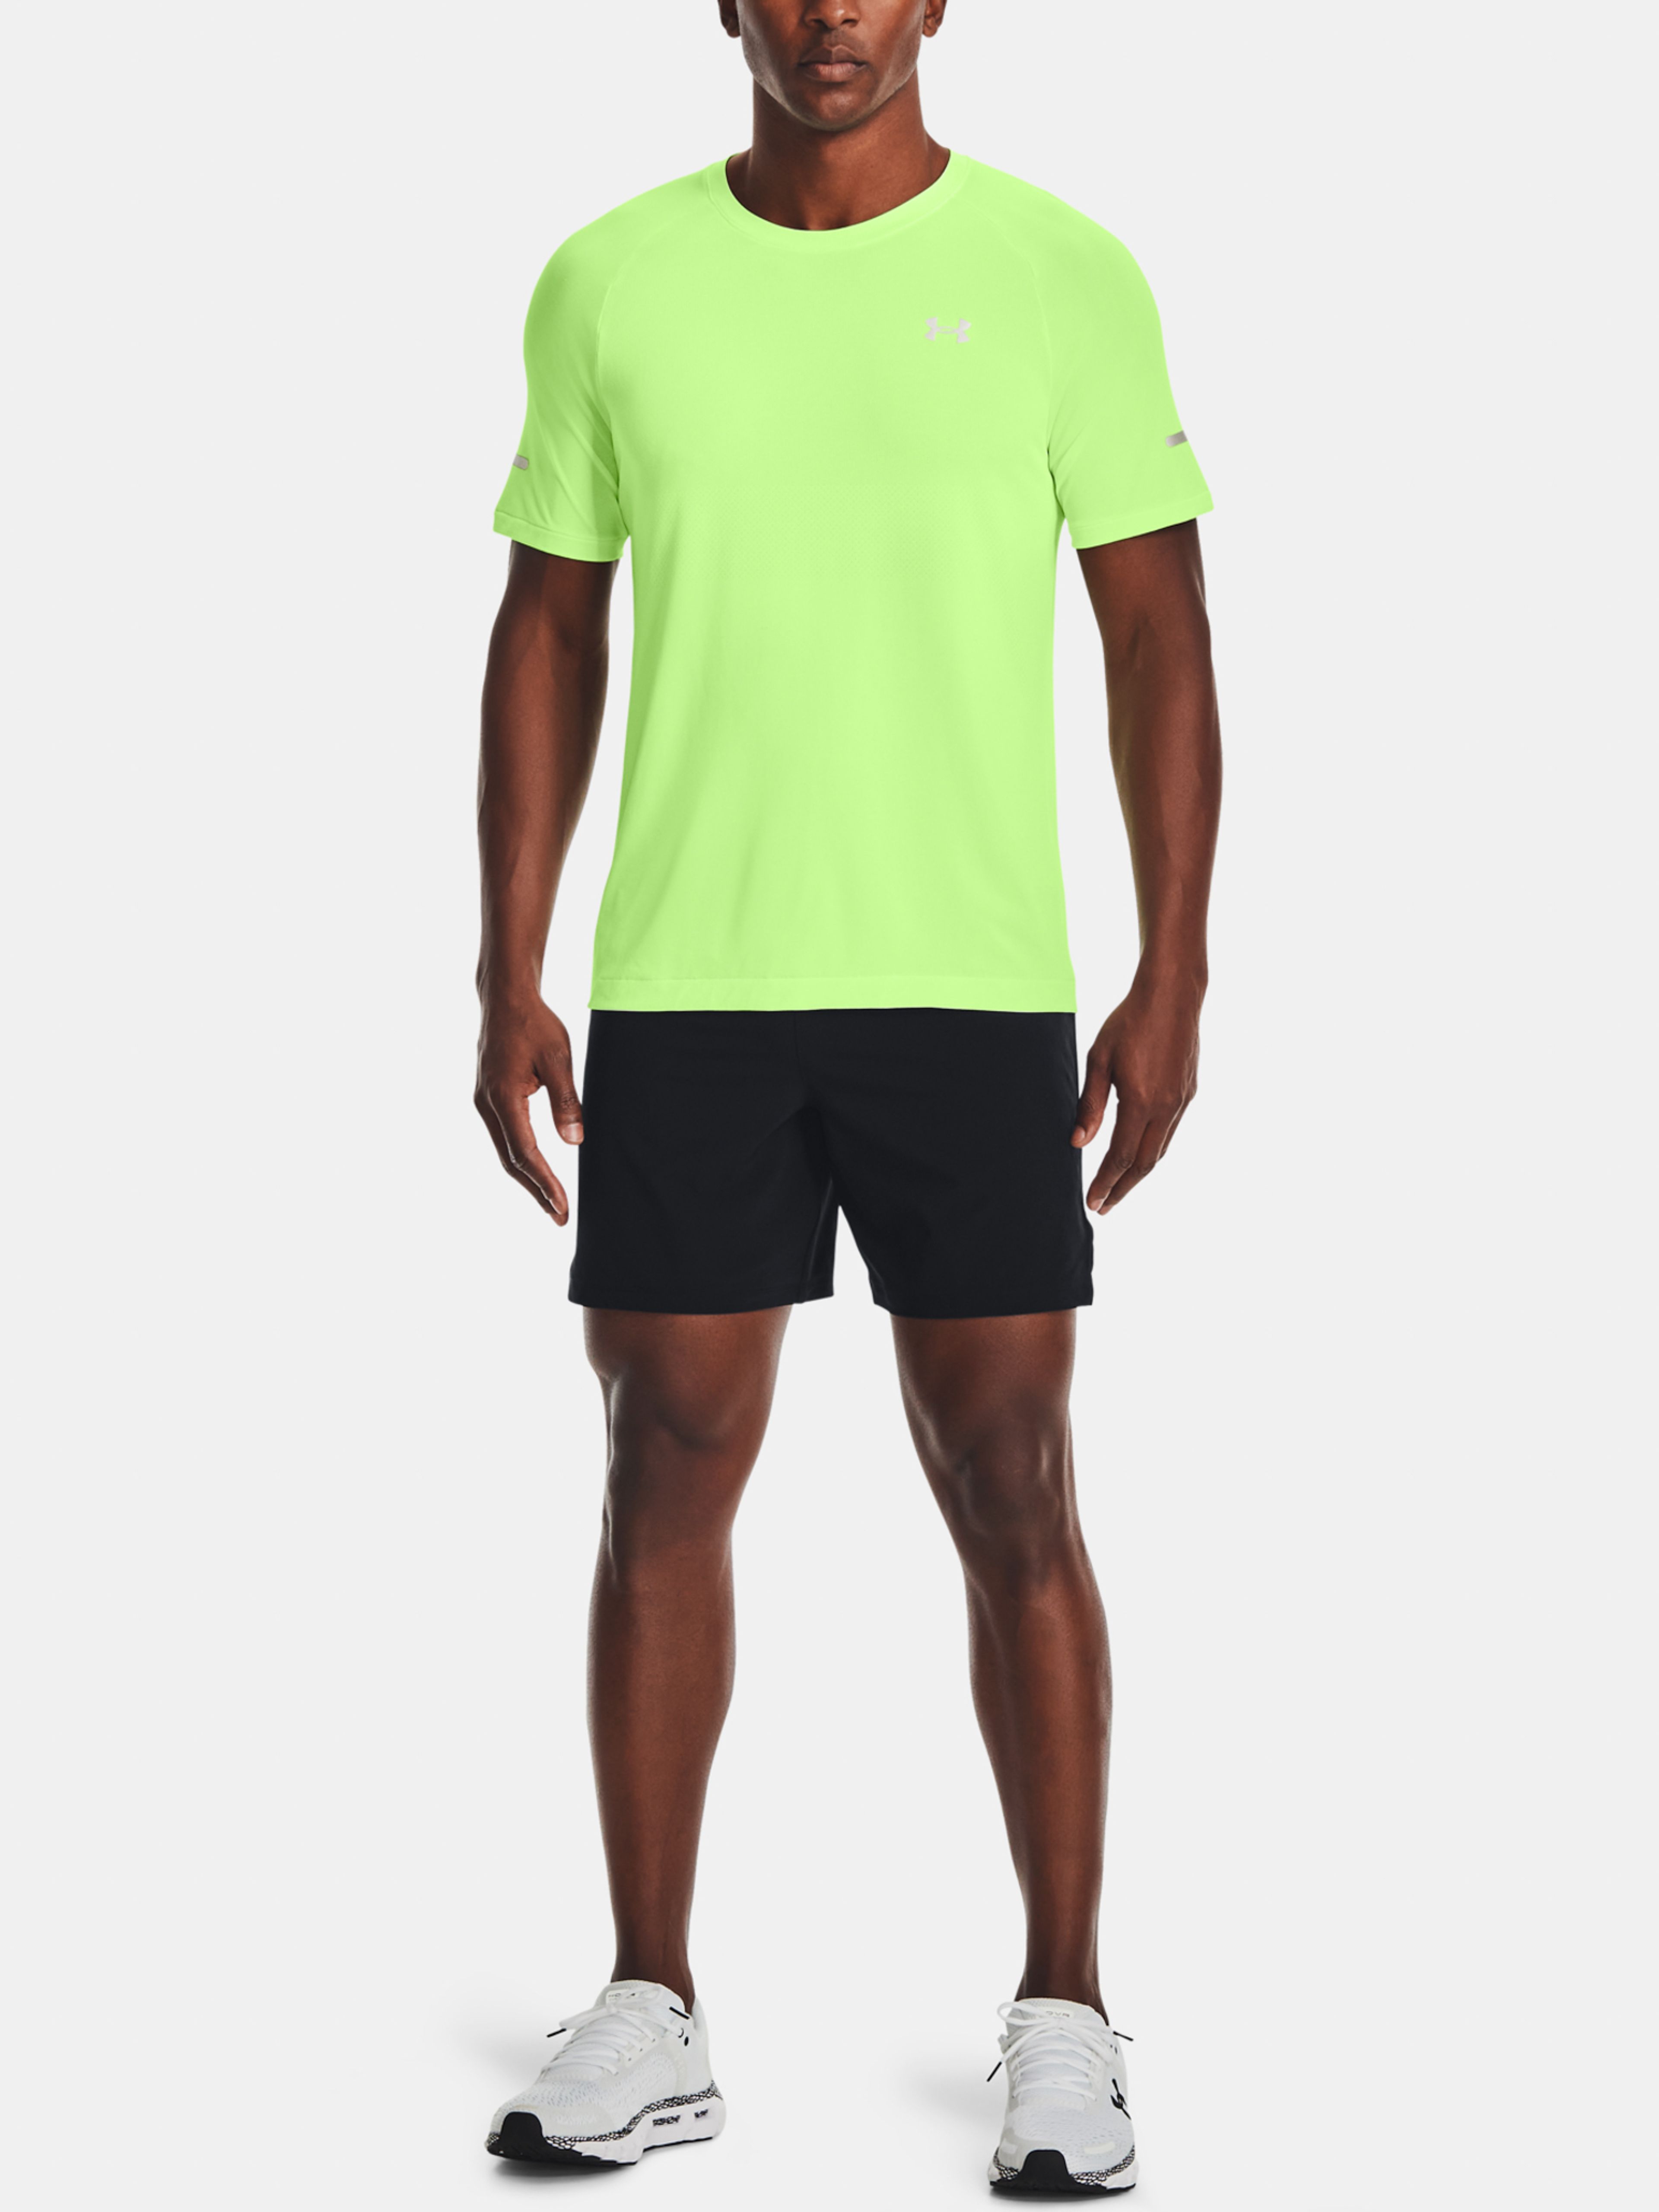  UA SPEEDPOCKET TIGHT, Black - men's compression leggings -  UNDER ARMOUR - 63.45 € - outdoorové oblečení a vybavení shop